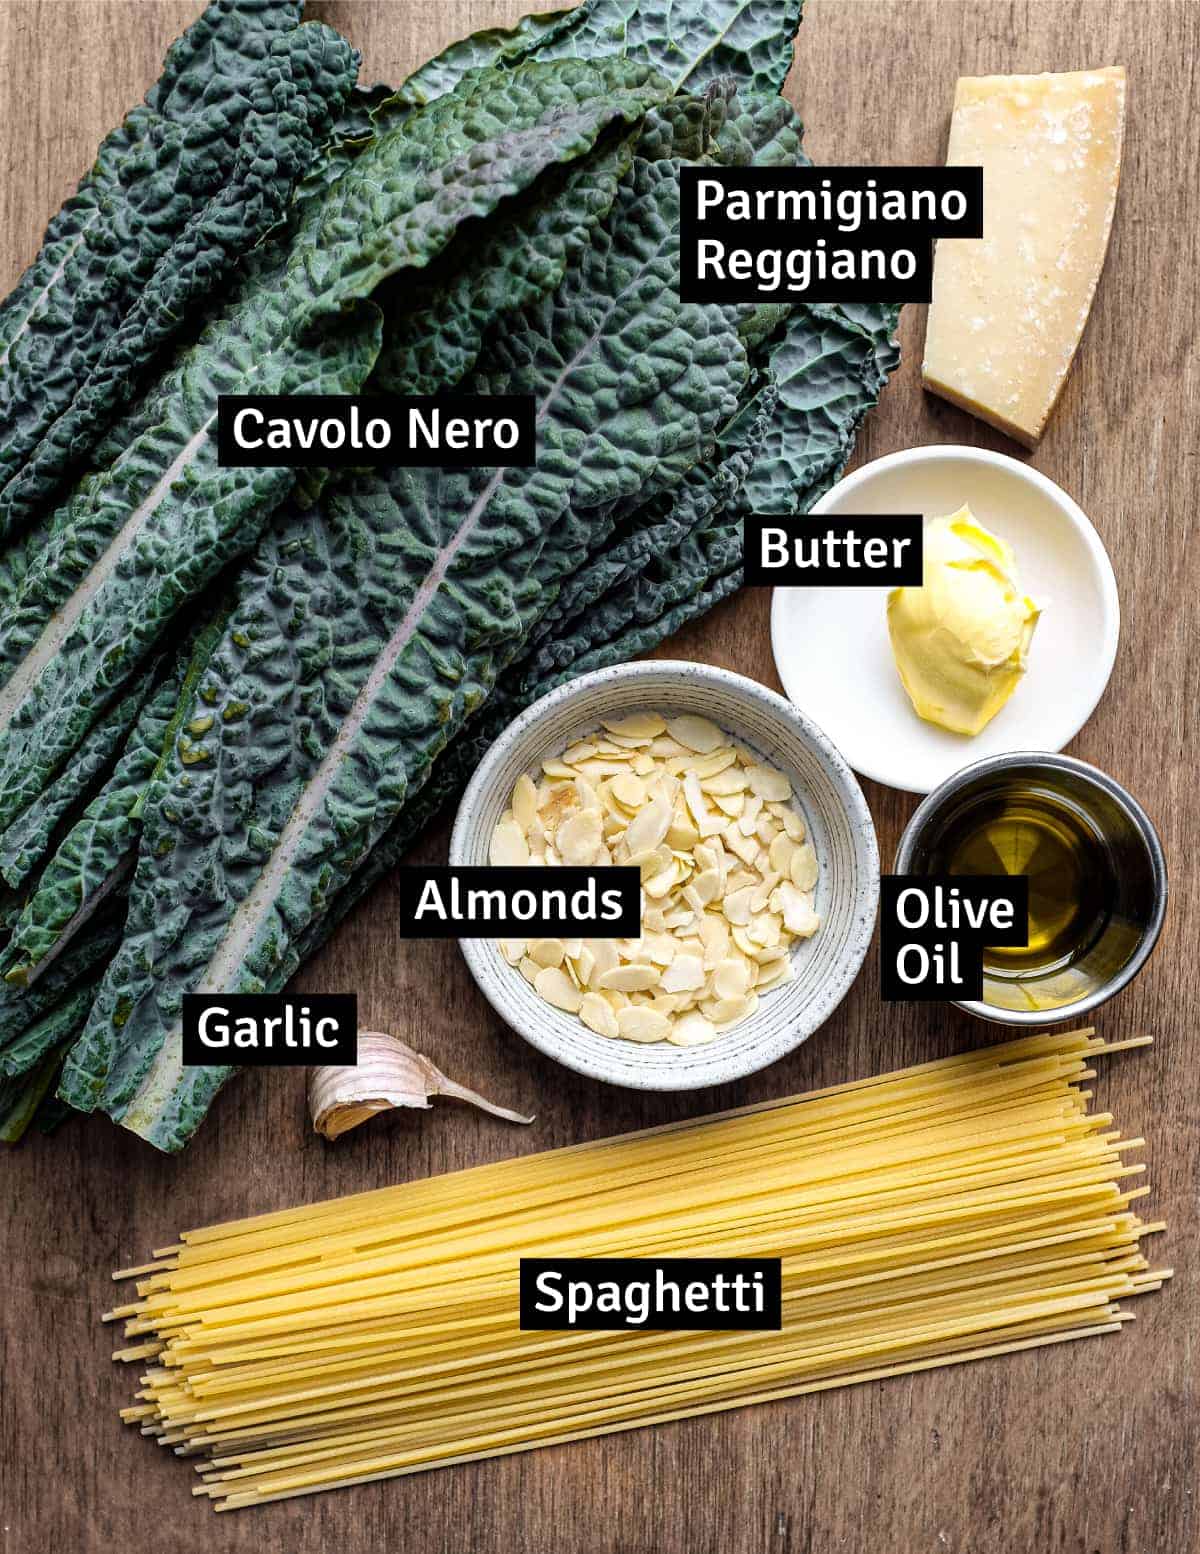 The ingredients for Cavolo Nero Spaghetti